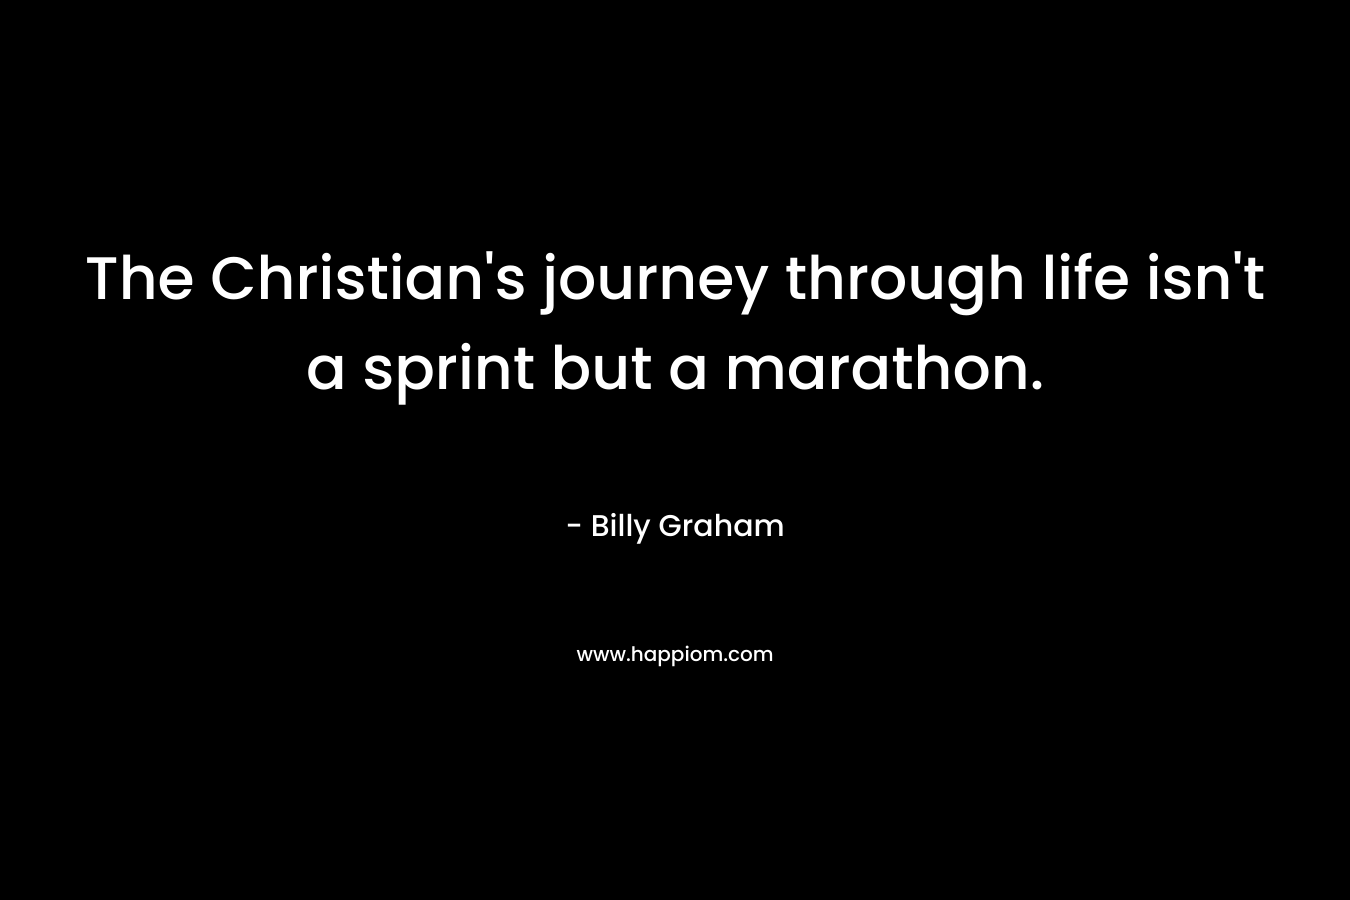 The Christian's journey through life isn't a sprint but a marathon.